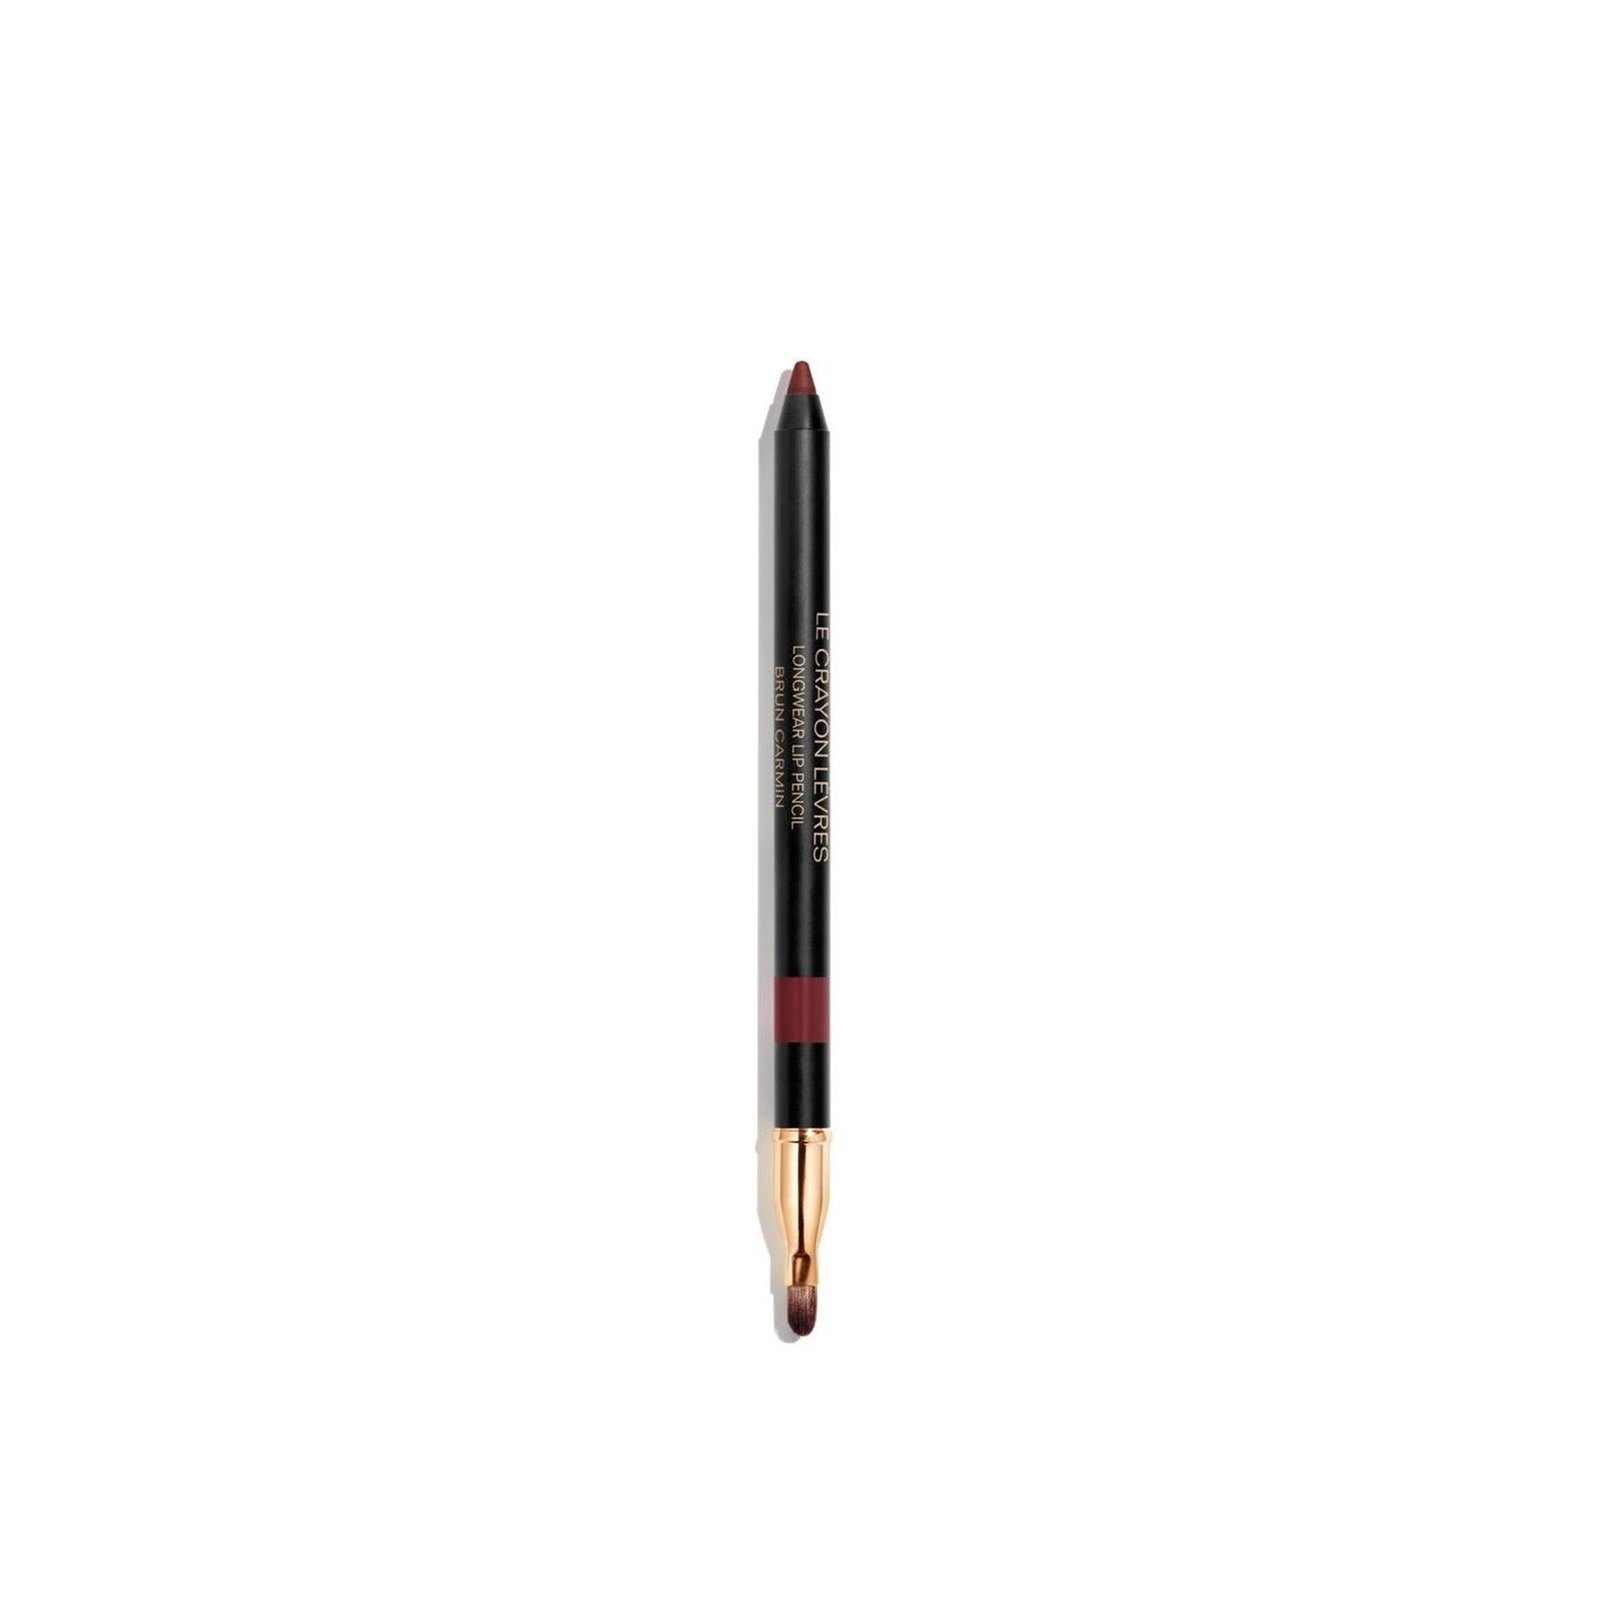 CHANEL Le Crayon Lèvres Longwear Lip Pencil 188 Brun Carmin 1.2g